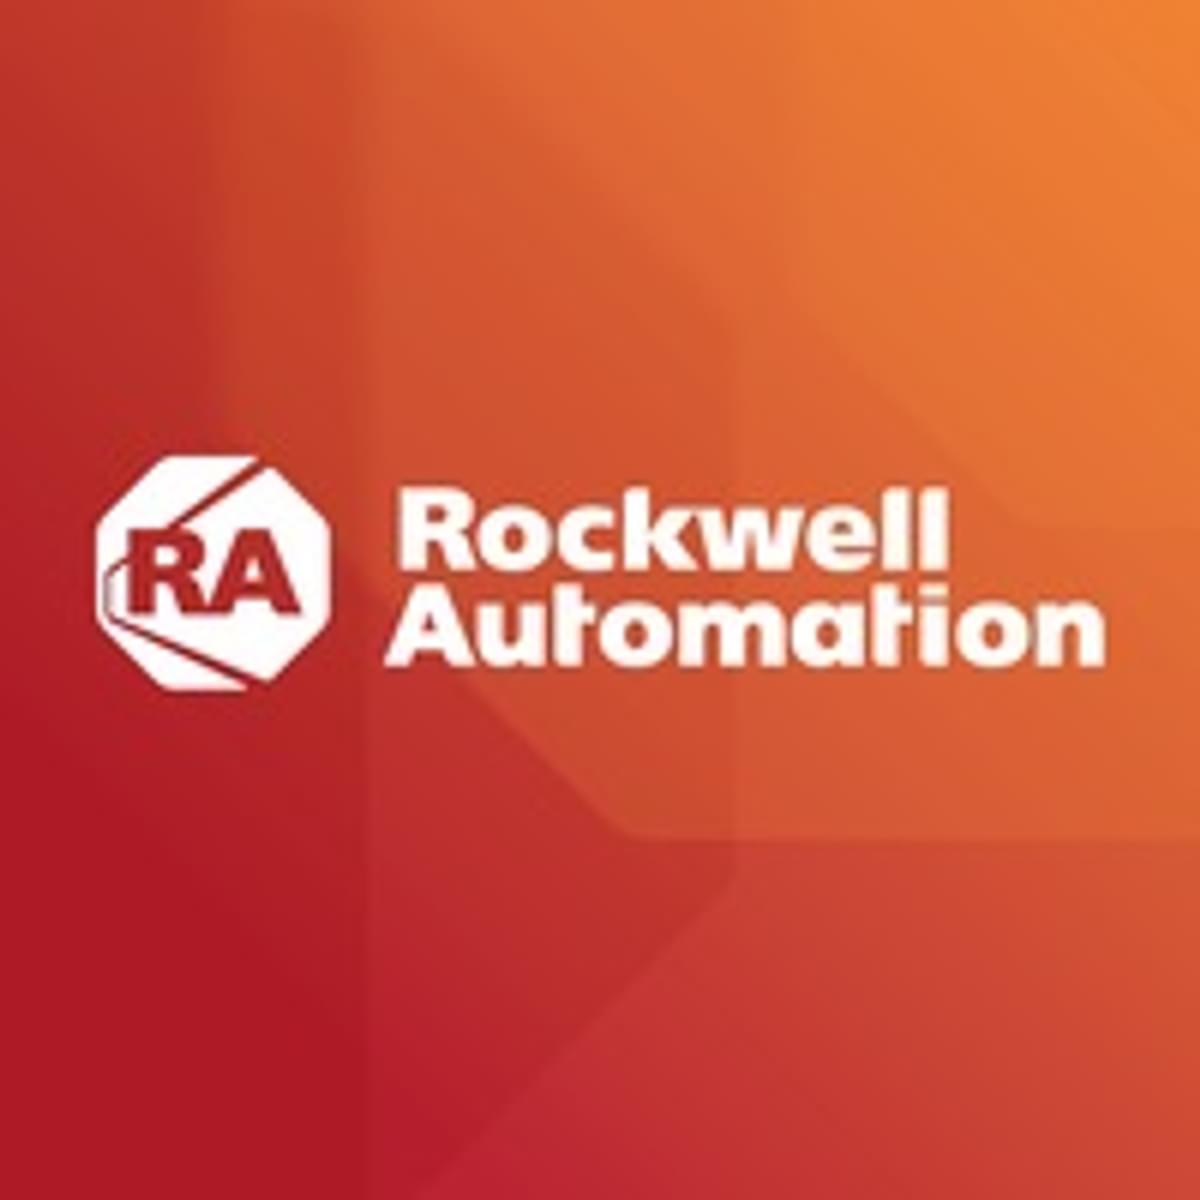 Rockwell Automation rondt overname van Plex Systems af image